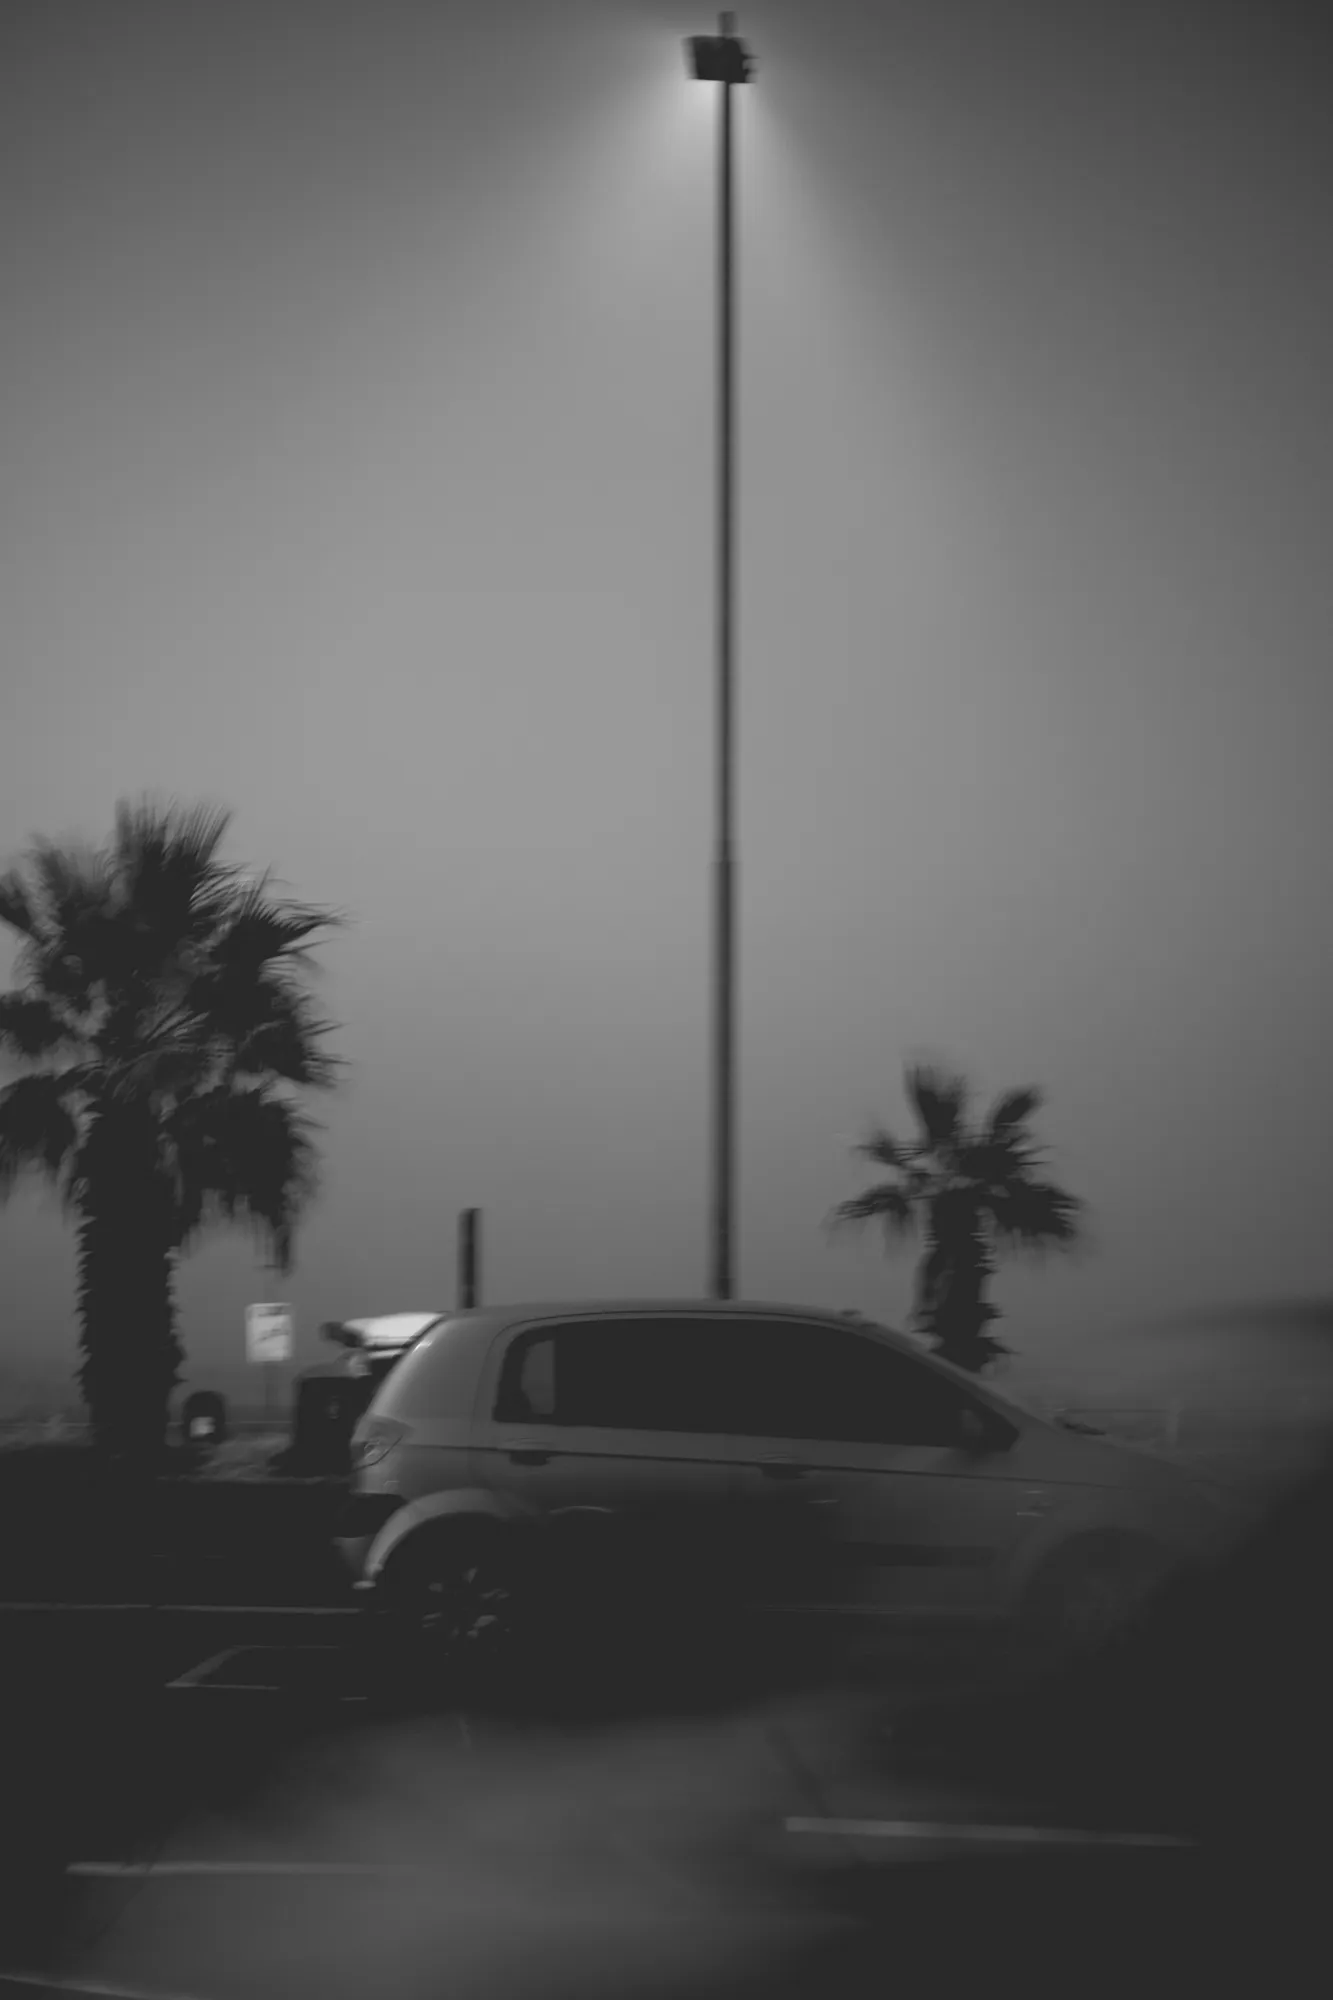 2022-02-15 - Cape Town - Car passes beneath street light on misty day